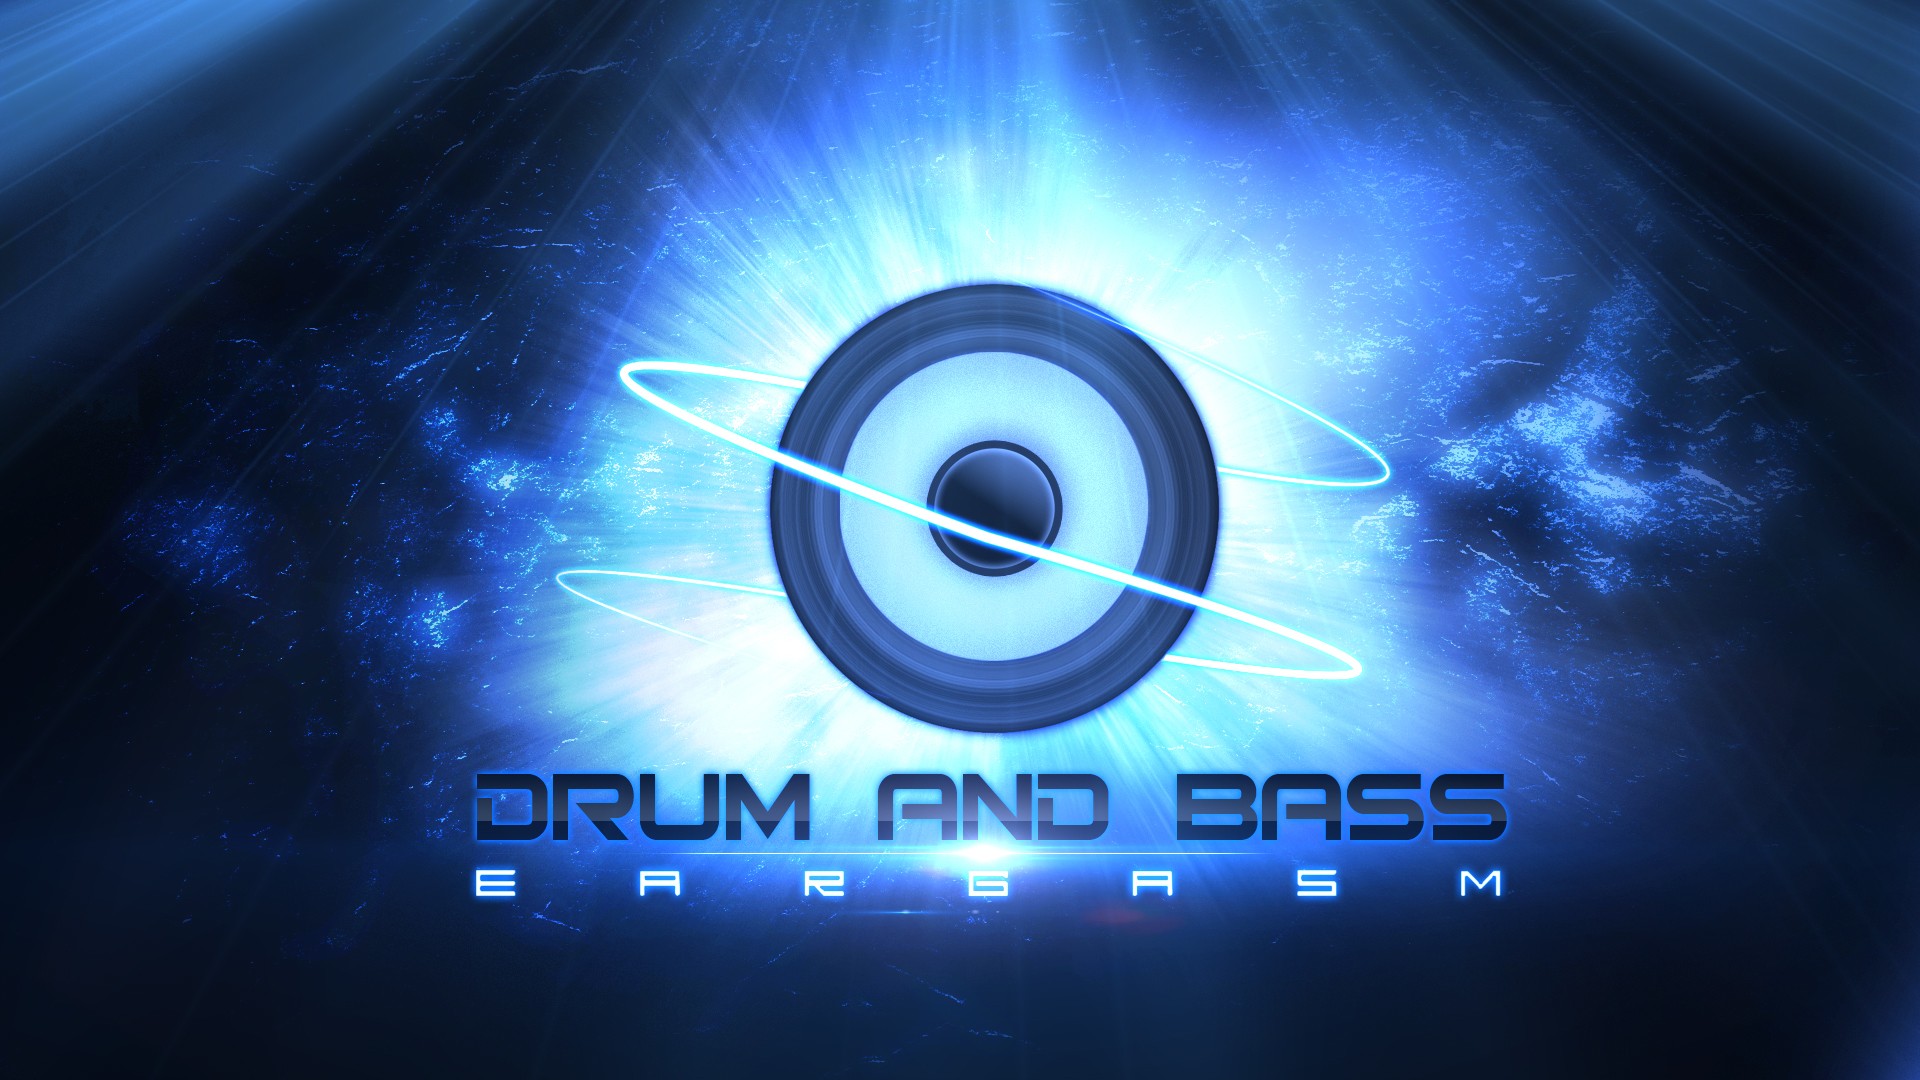 drum n bass, Drum, Bass, Dnb, Electronic, Drum and bass Wallpaper